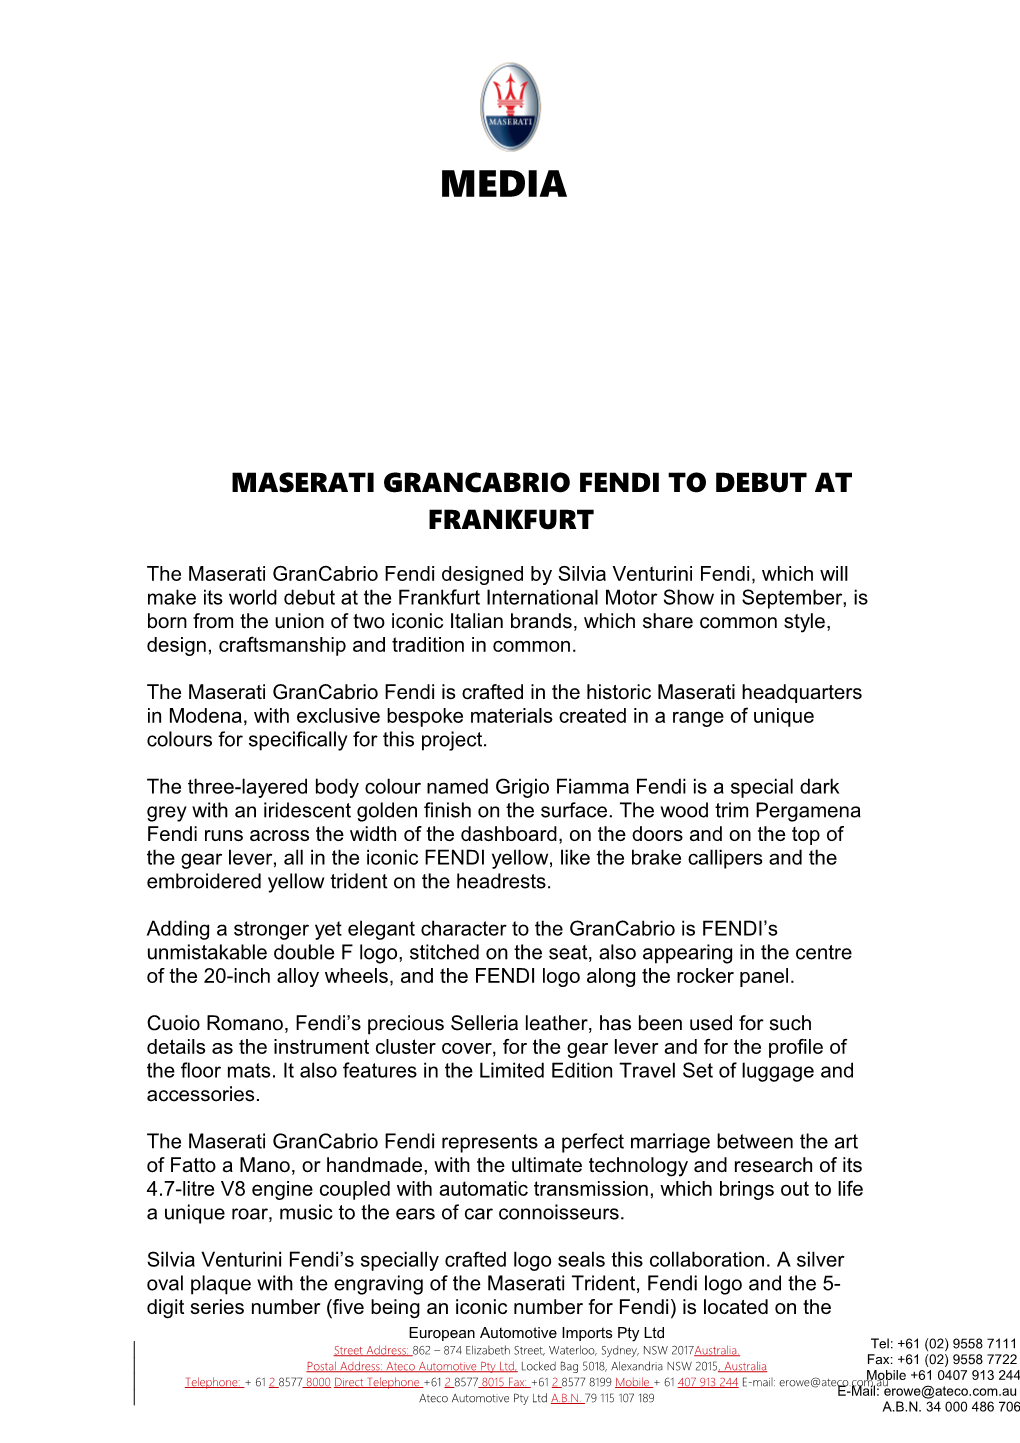 Maserati Grancabrio Fendi to Debut at Frankfurt